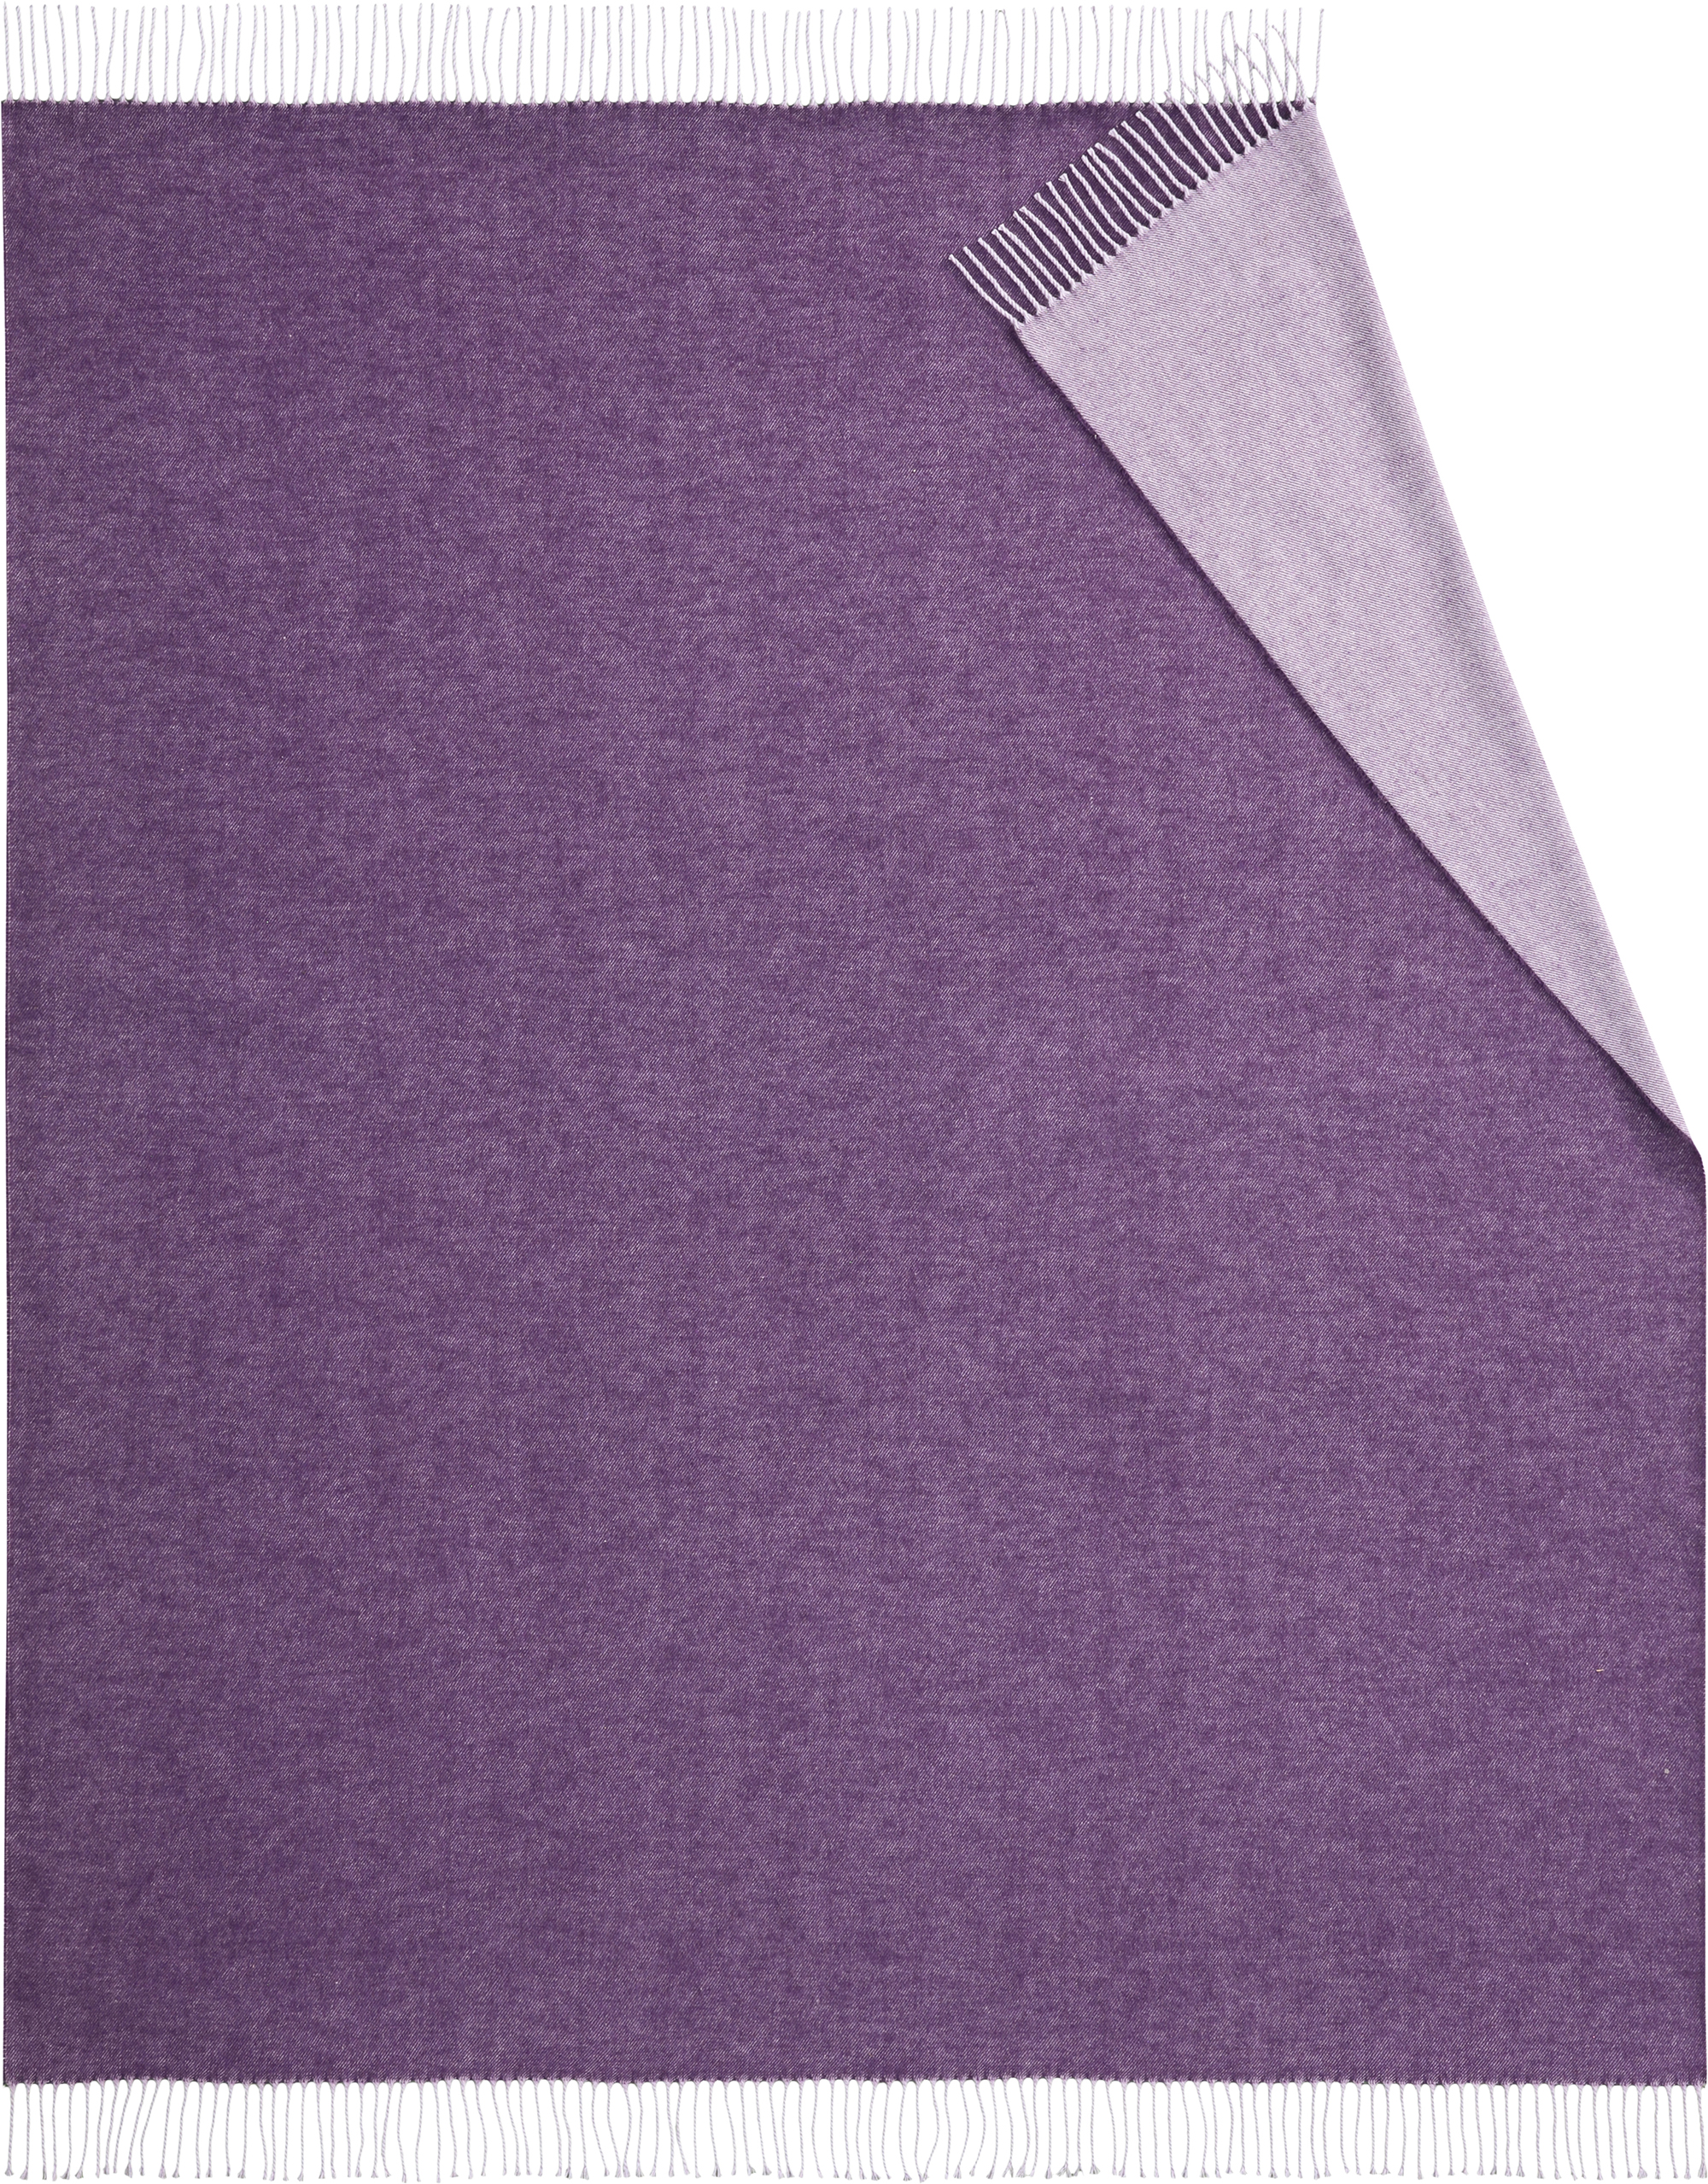 Fransenplaid Twill Farbe violet Freisteller glatt mit umgelegter Ecke